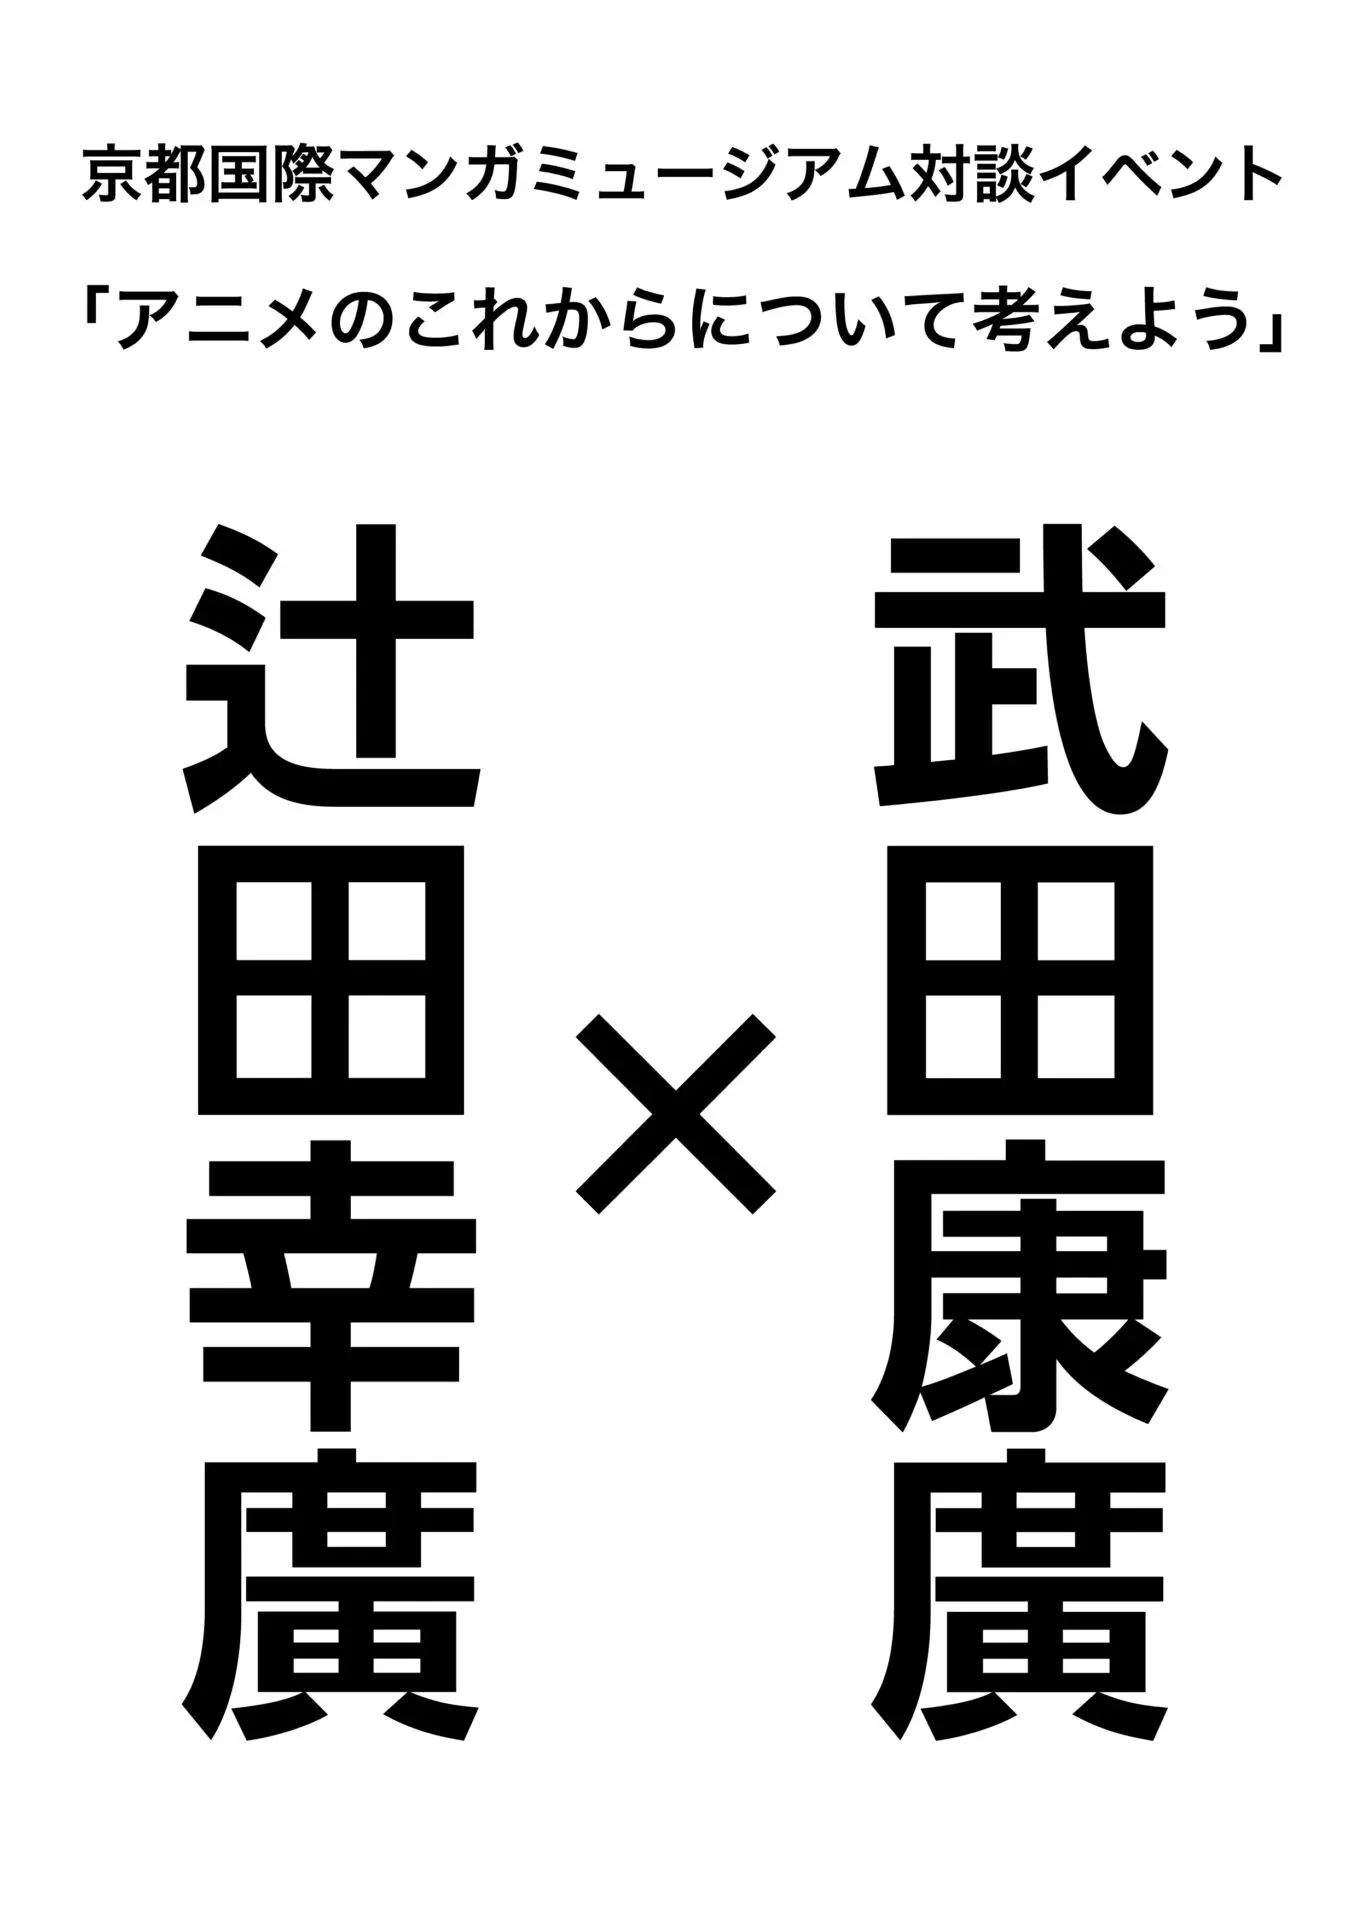 About the Japanese notation｜アニメ・マンガの日本語 Japanese in Anime & Manga